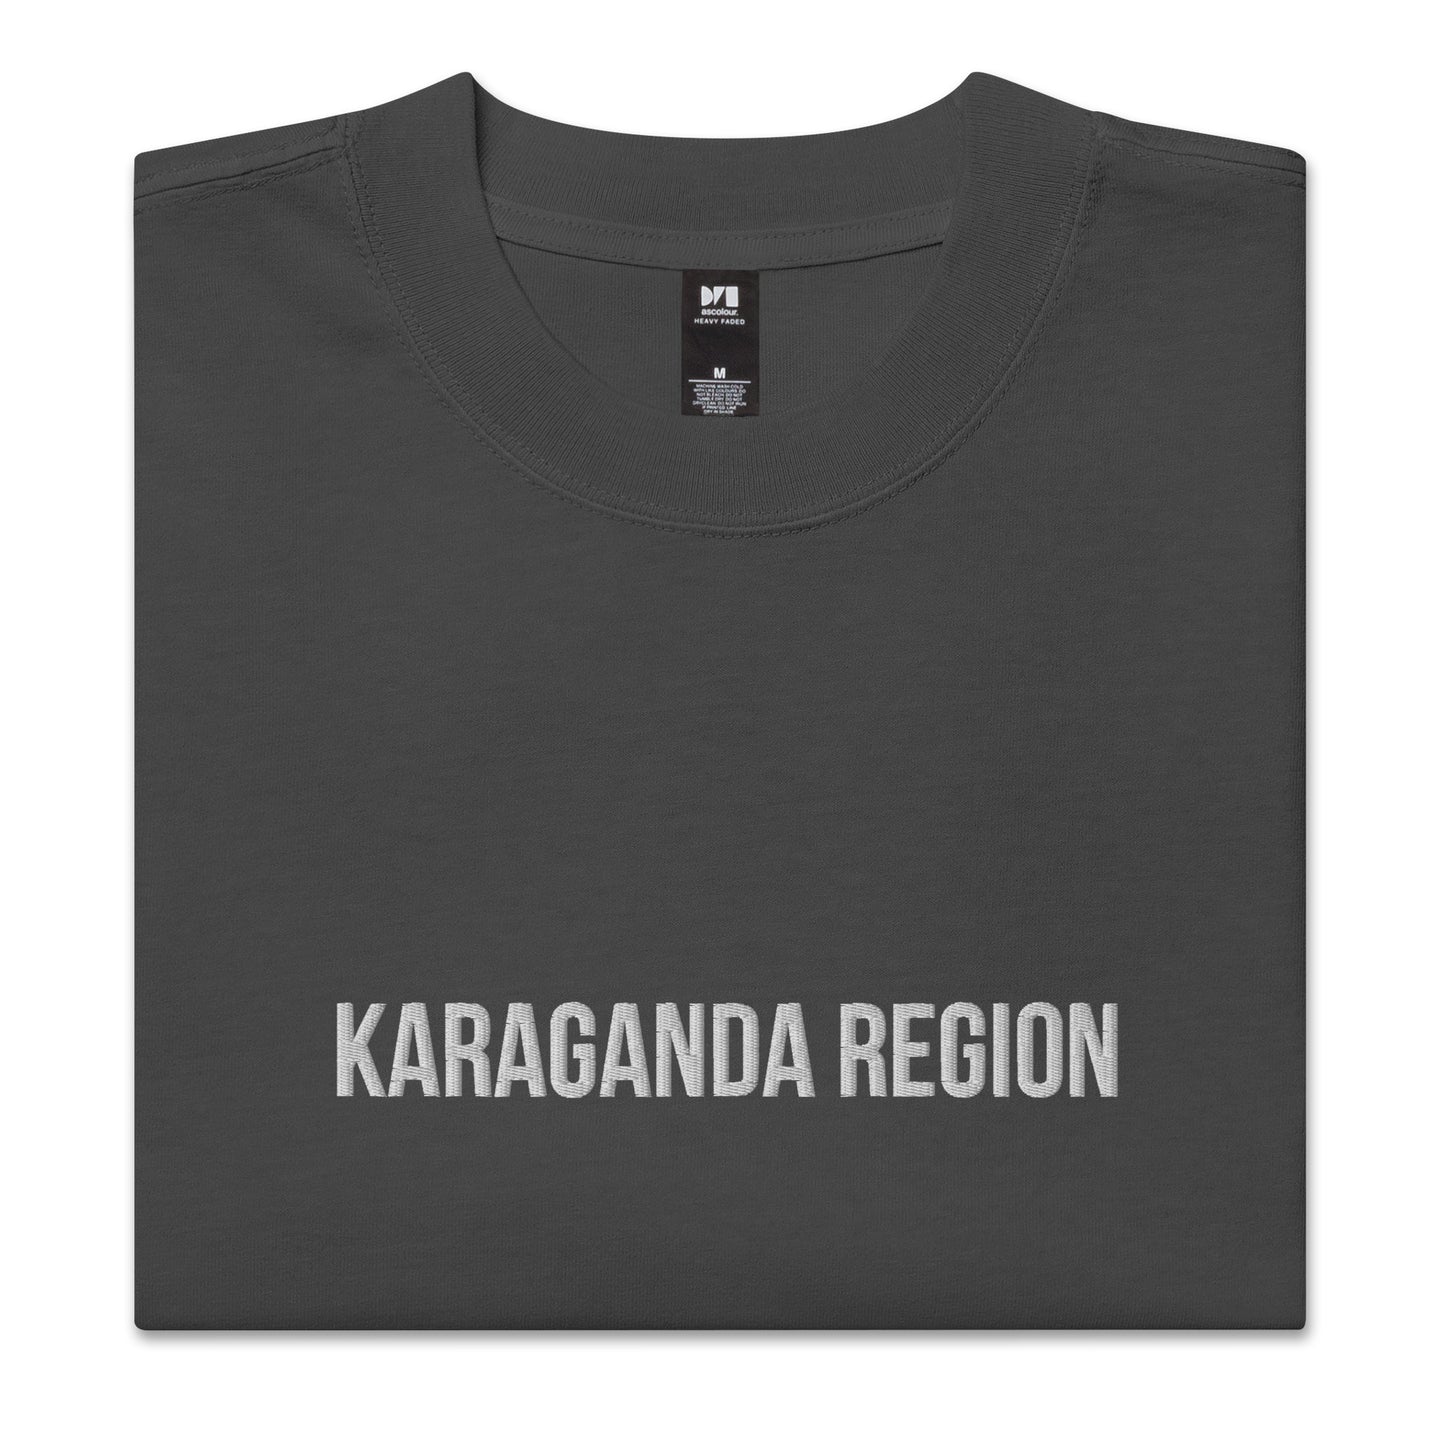 Karaganda Region KZ 09 Embroidered Oversized T-shirt